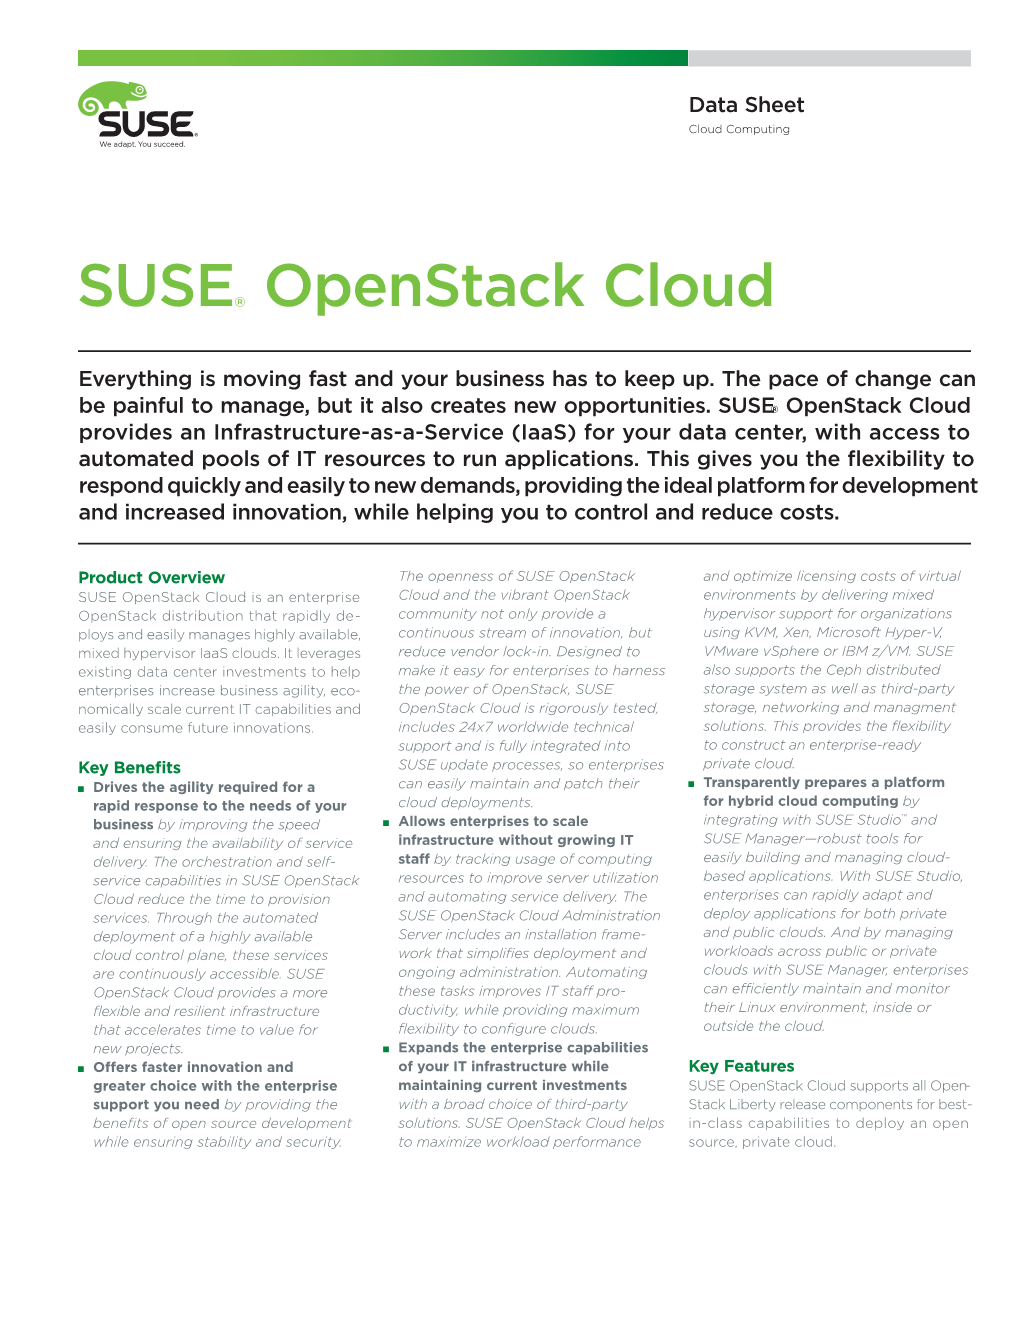 SUSE® Openstack Cloud